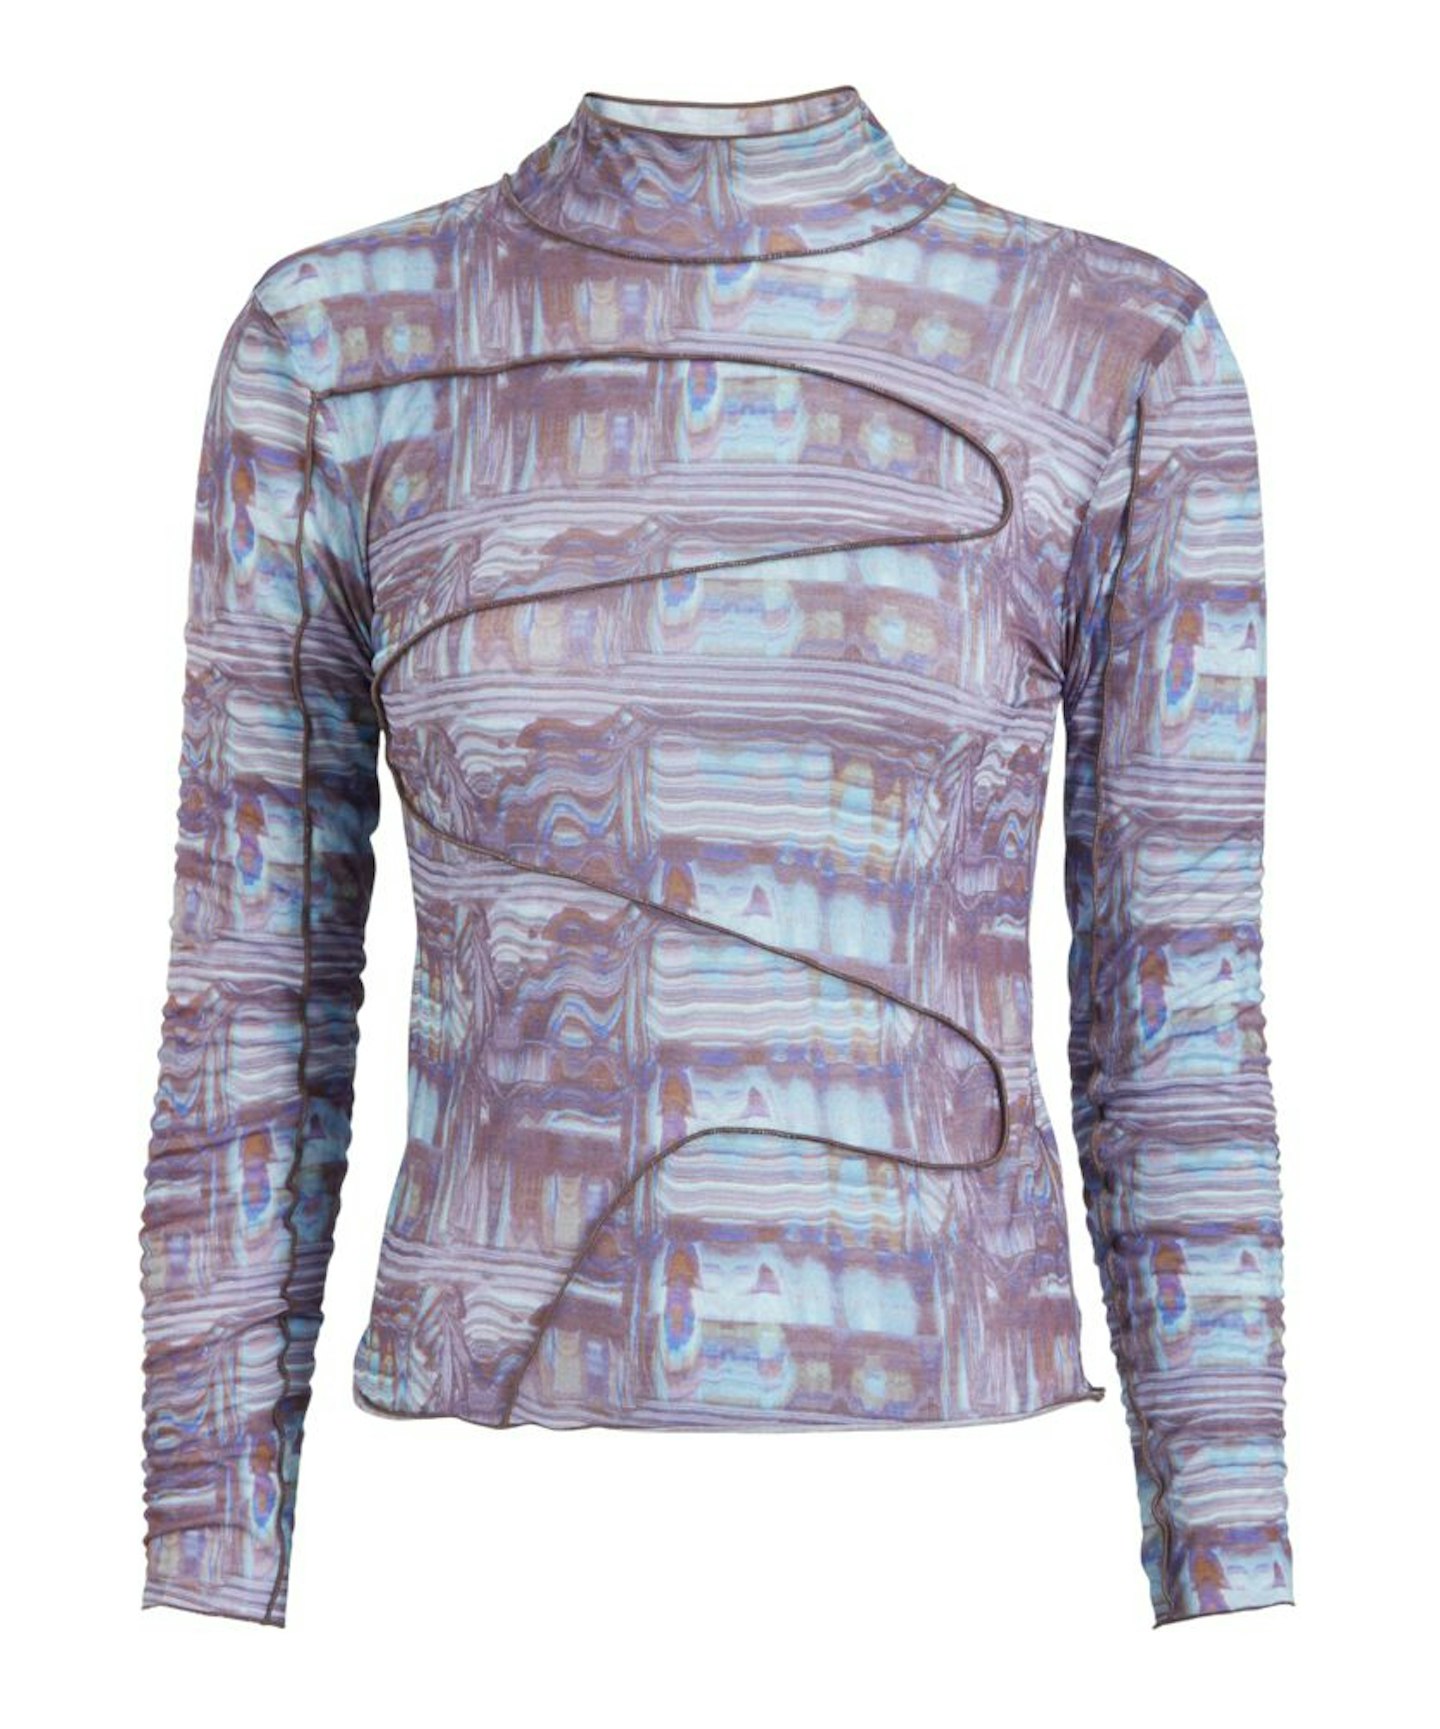 Paloma Wool, Cometa Long-Sleeve T-shirt, £110